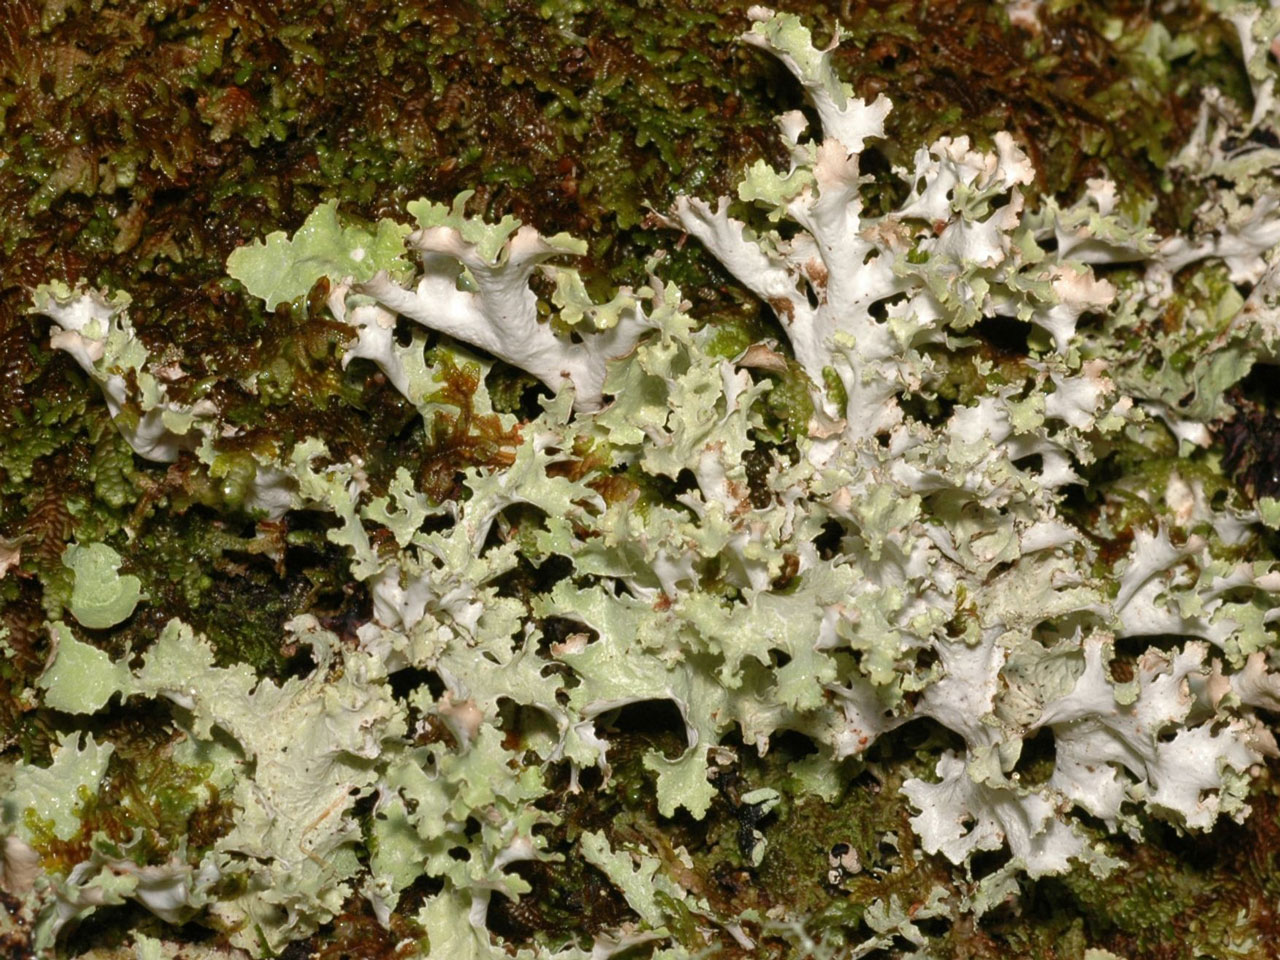 Platismatia glauca, shade morph on mossy oak trunk, Lochaline, Morvern